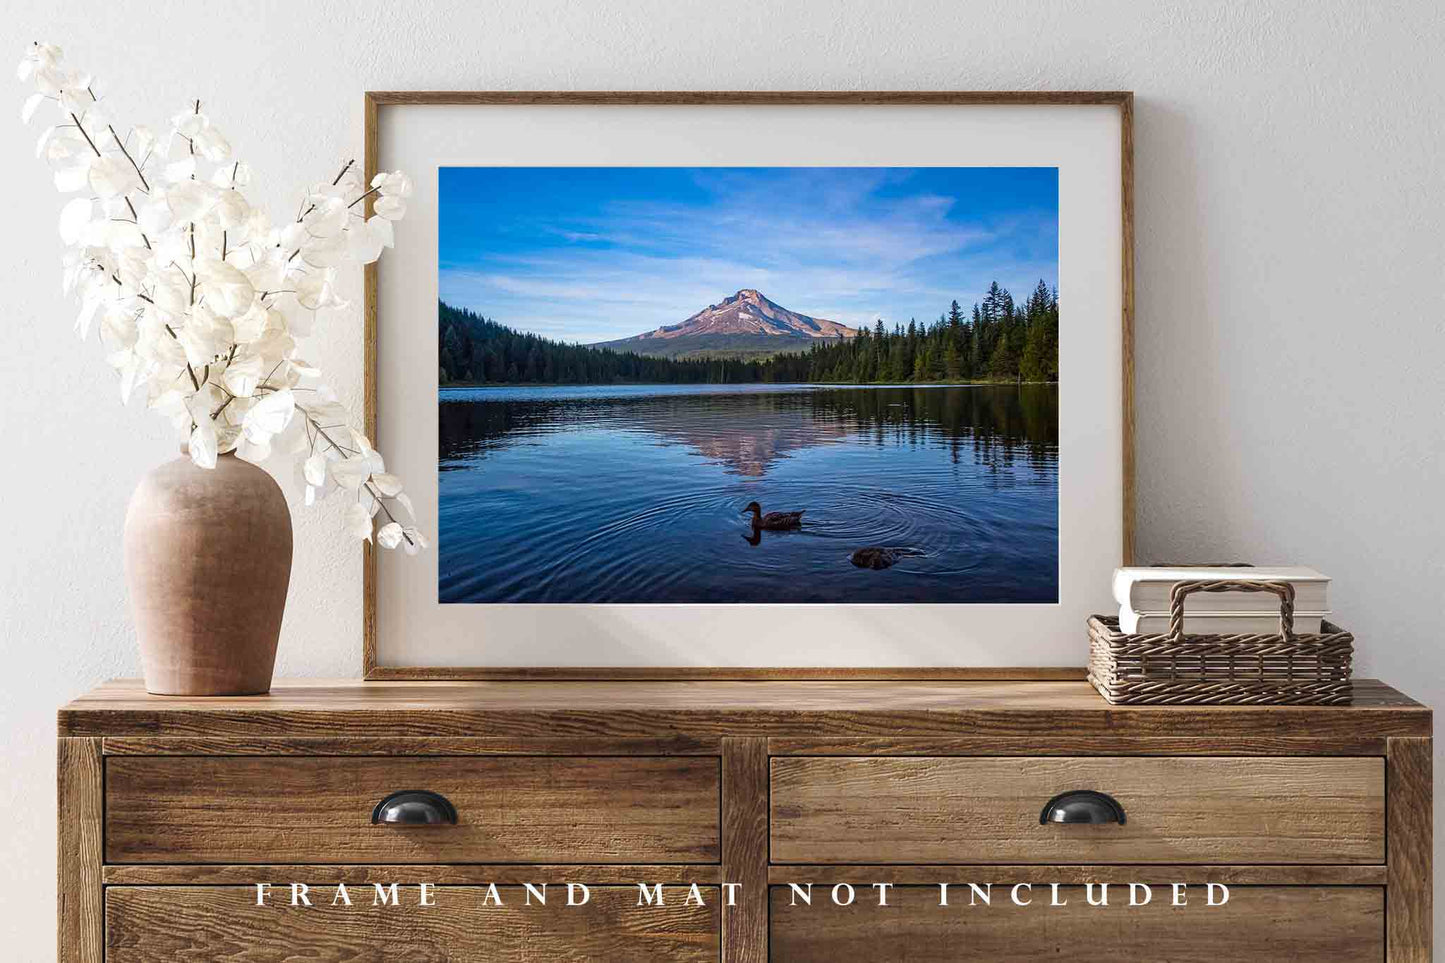 Pacific Northwest Photo Print | Mount Hood Picture | Oregon Wall Art | Landscape Photography | Nature Decor